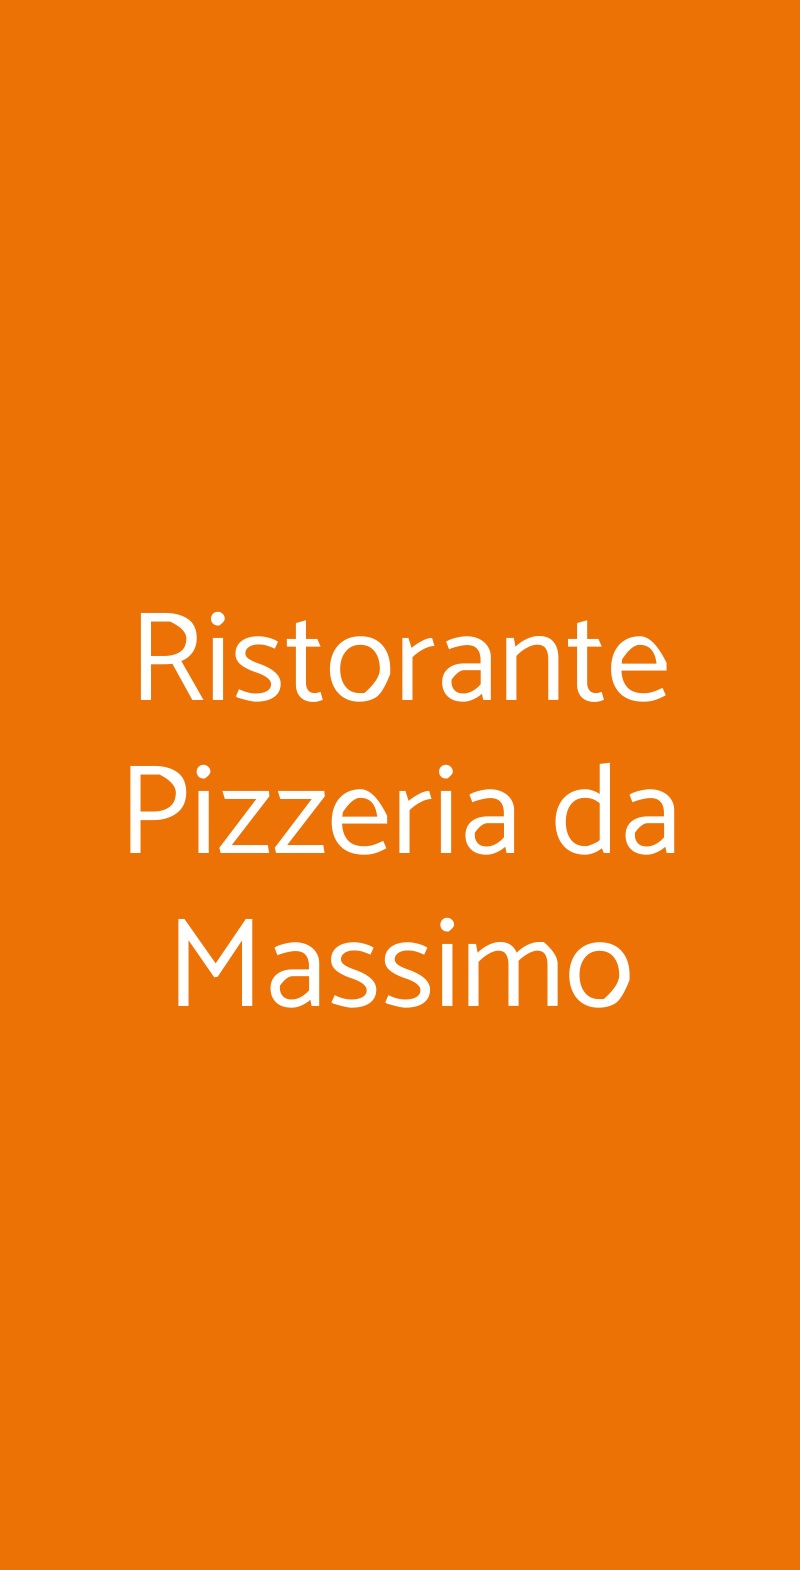 Ristorante Pizzeria da Massimo Milano menù 1 pagina